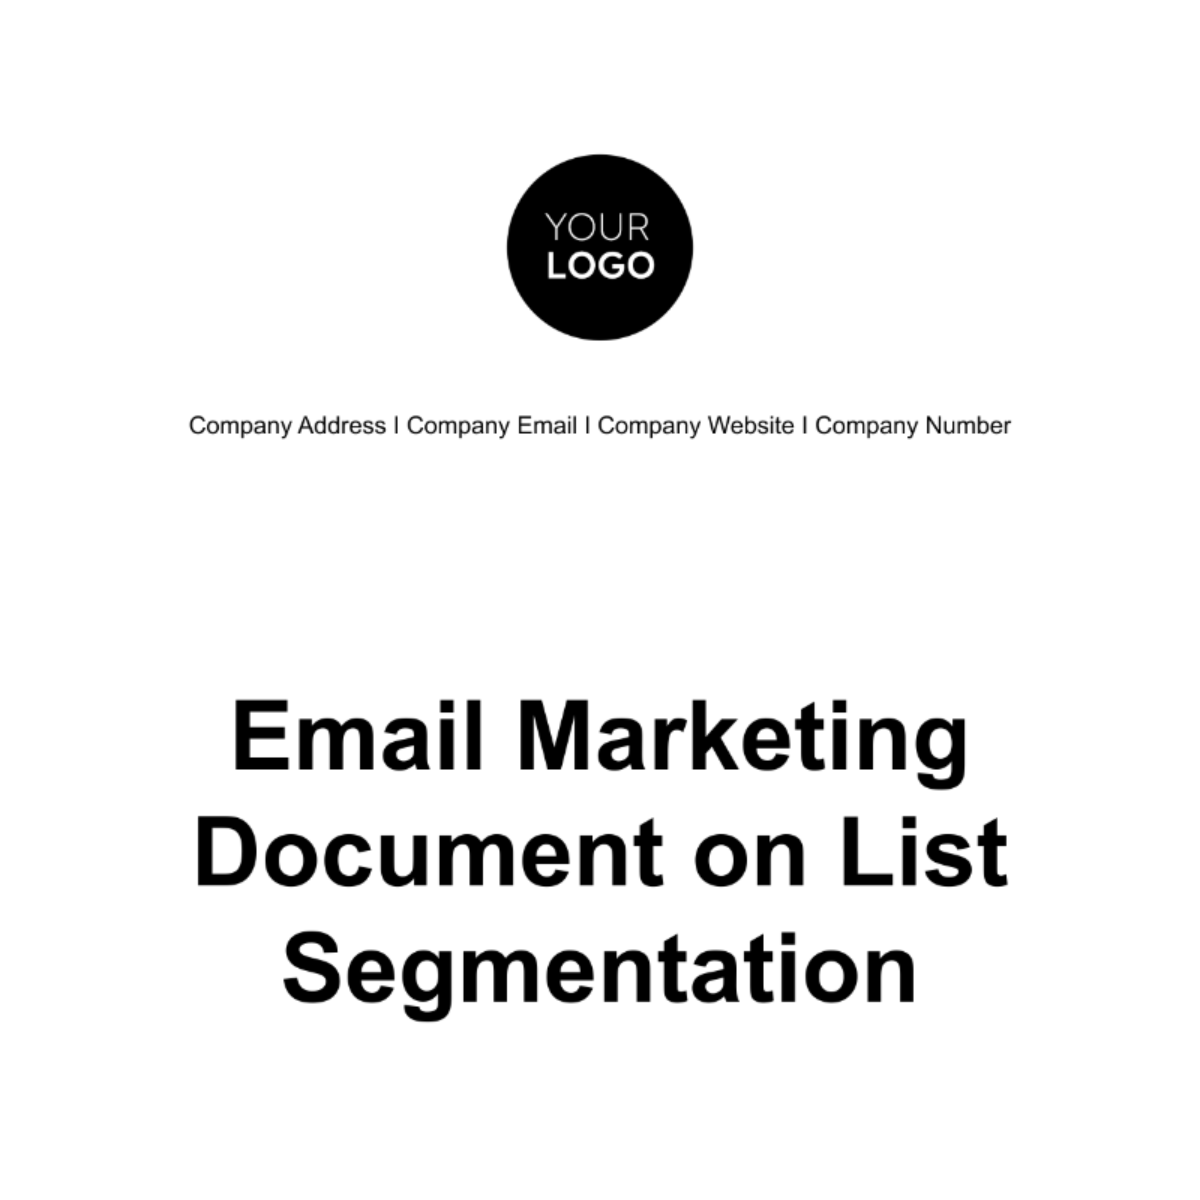 Free Email Marketing Document on List Segmentation Template